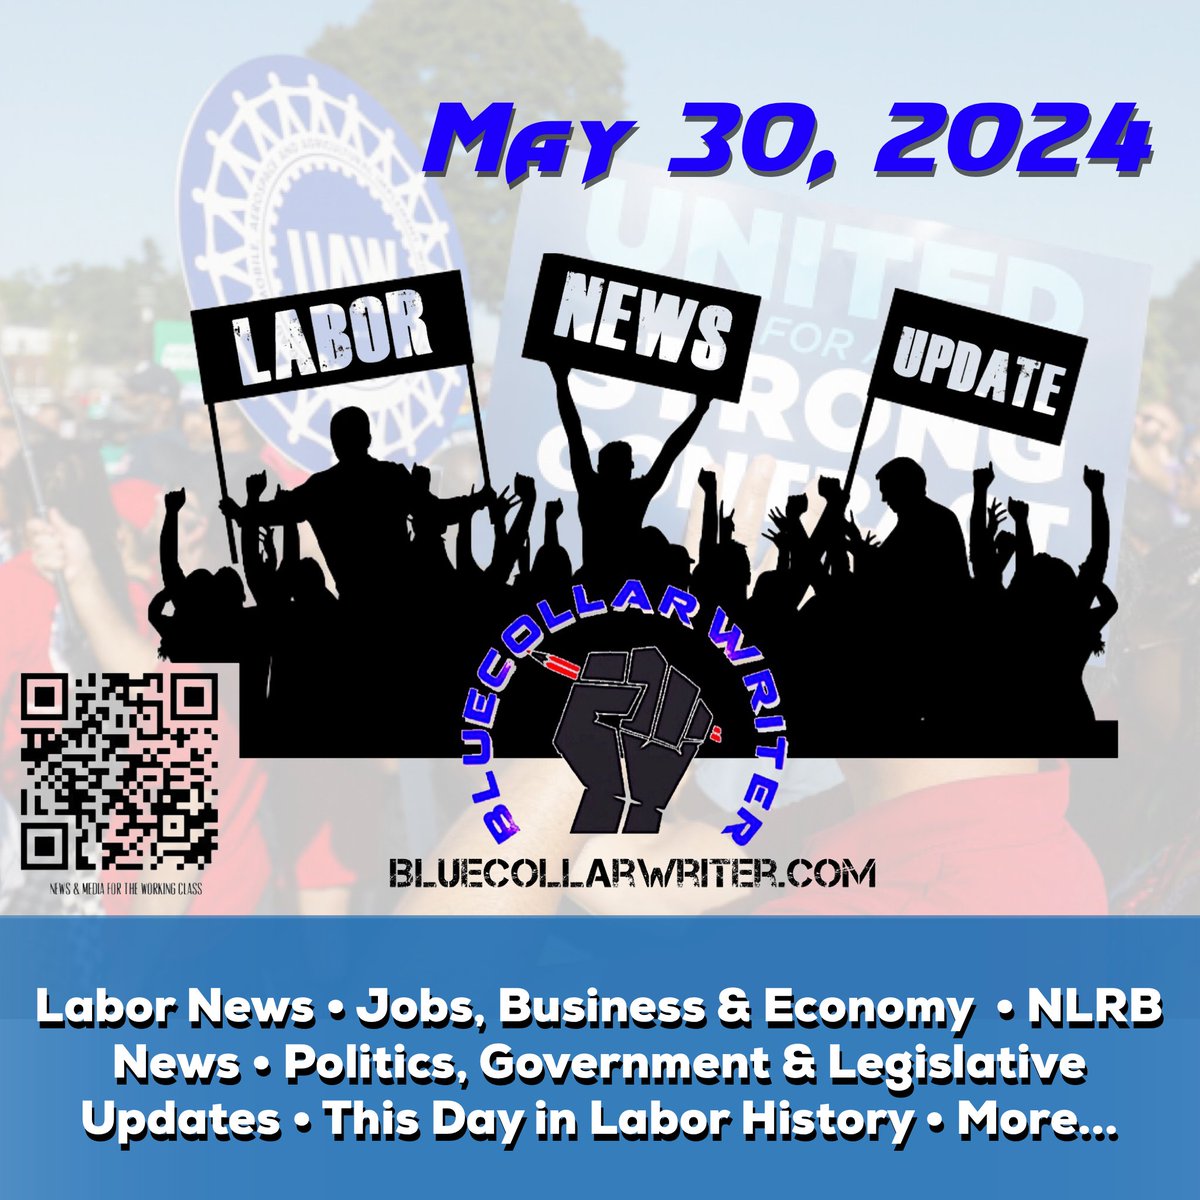 #BlueCollarWriter Labor News Update - 5/30/2024: 

bluecollarwriter.com/home/labor-new…

#1u #UnionStrong #UnionYes #ItsBetterInAUnion #LaborHistory #NLRB #Jobs #Economy 
#UnionBustingIsDisgusting